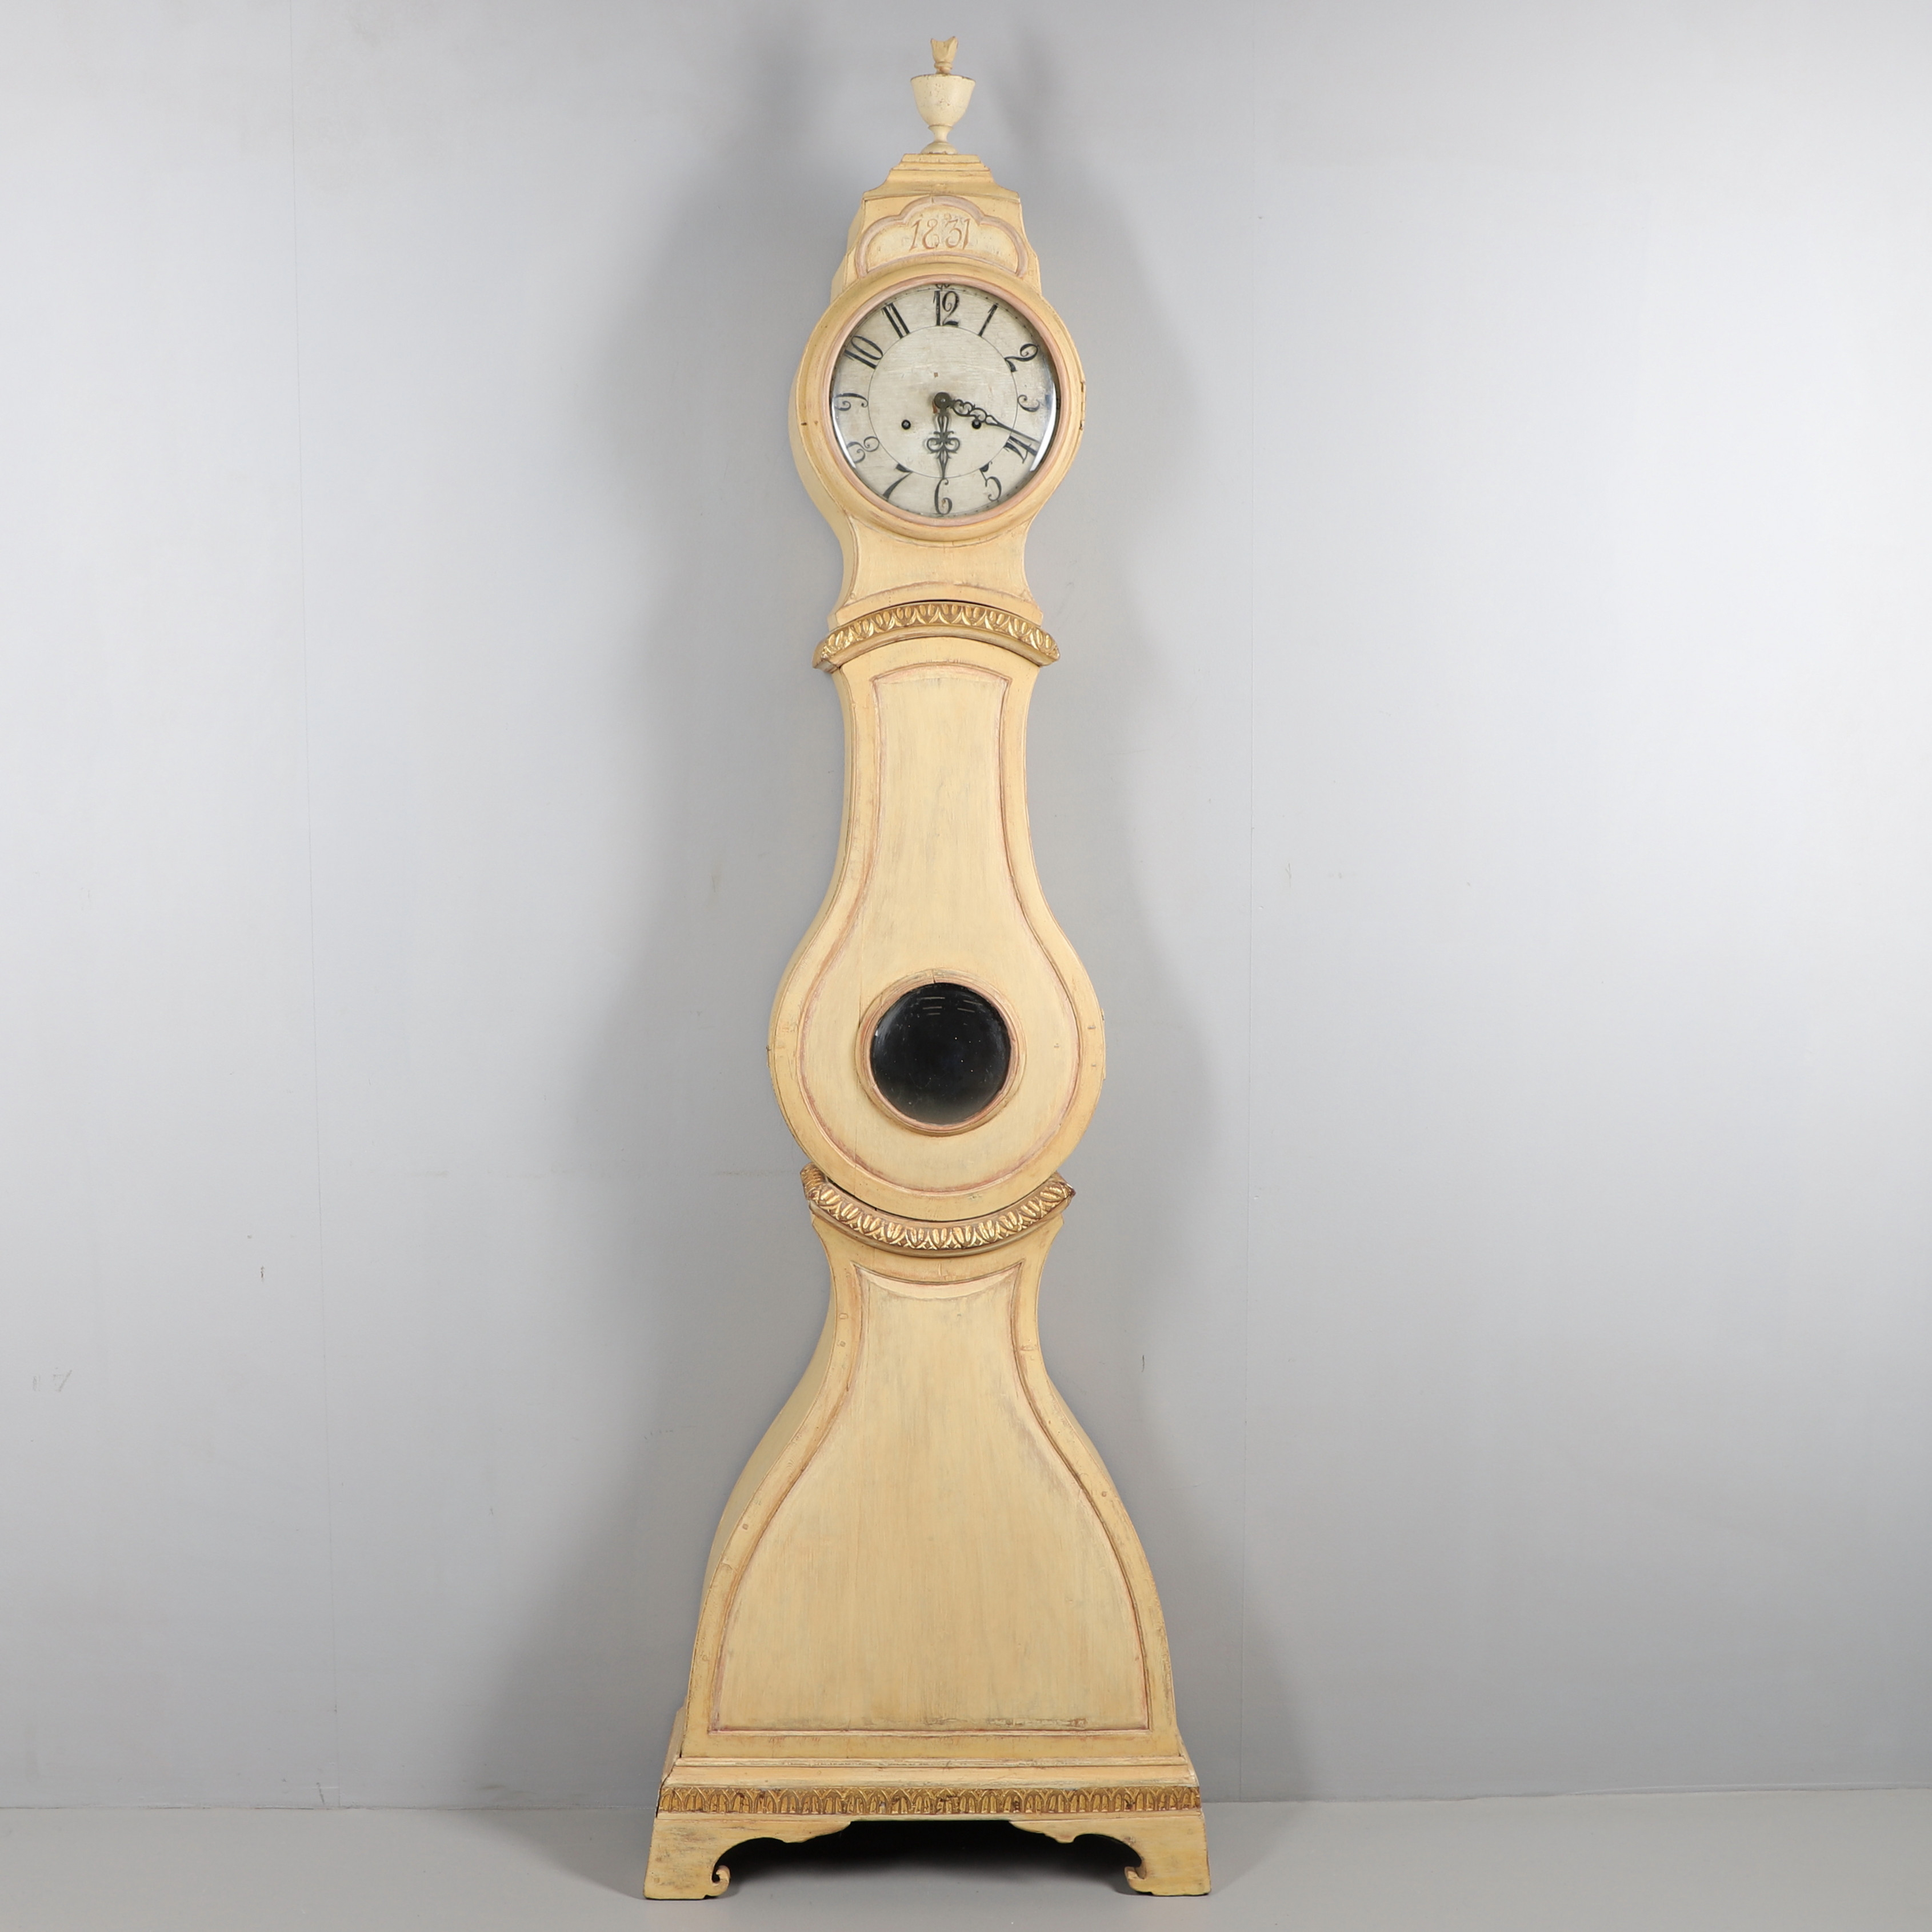 A 19TH CENTURY FINNISH 'COMTOISE' CLOCK, Ã–STROBOTHNIA REGION. - Image 2 of 26